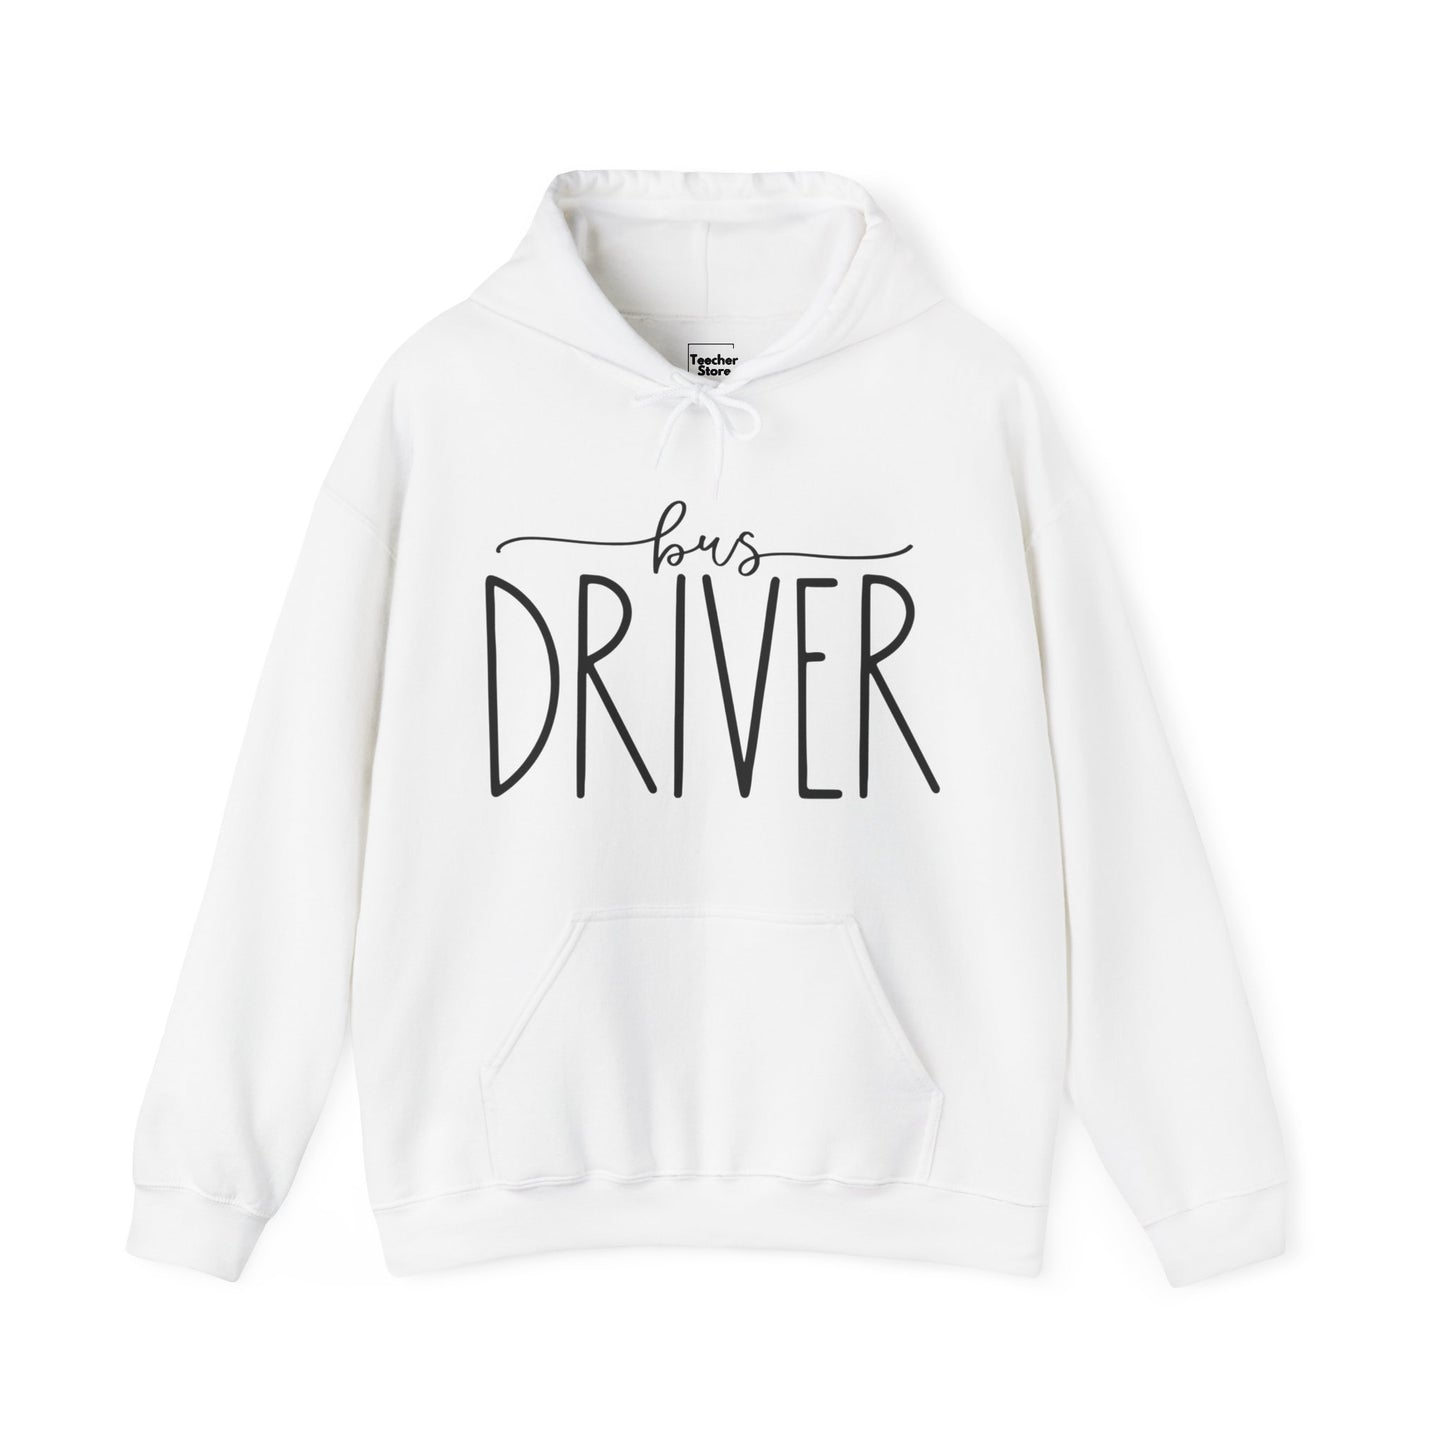 Driver Hooded Sweatshirt